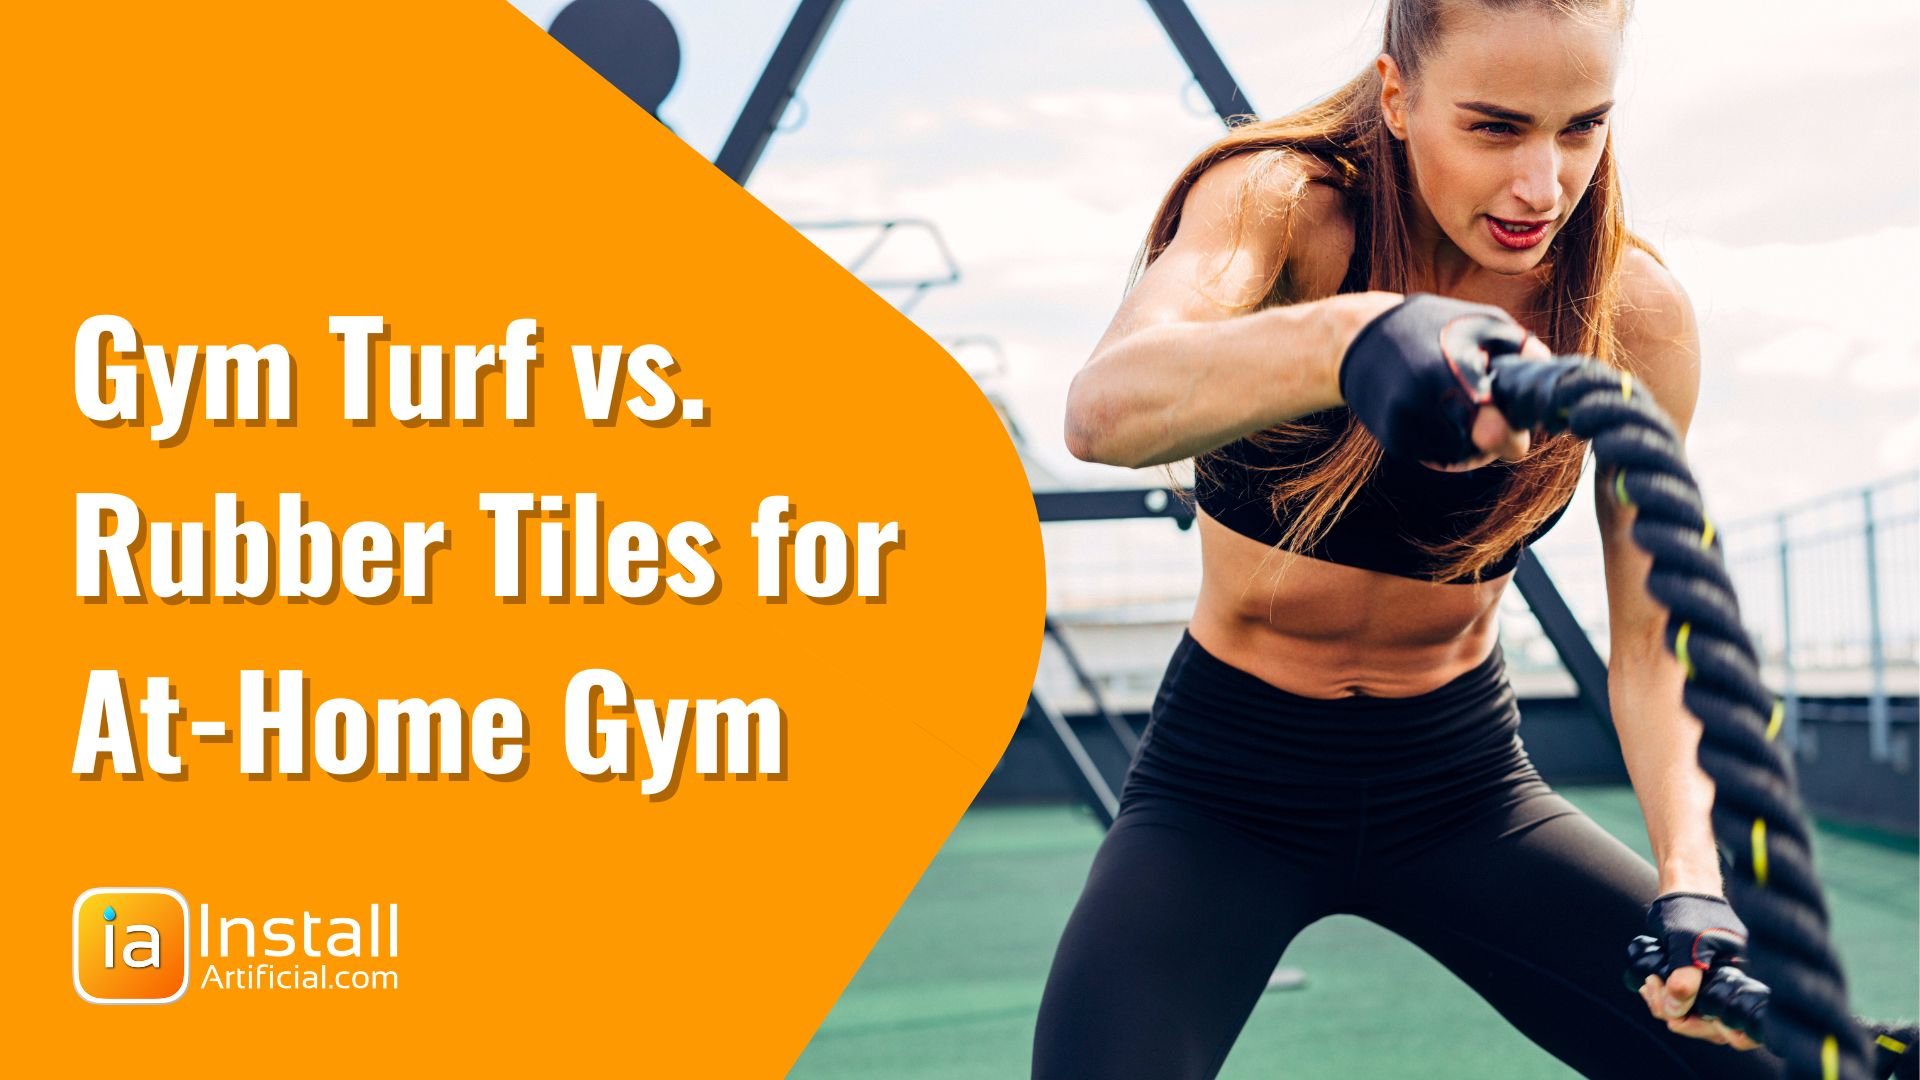 Rubber Tiles vs Gym Turf